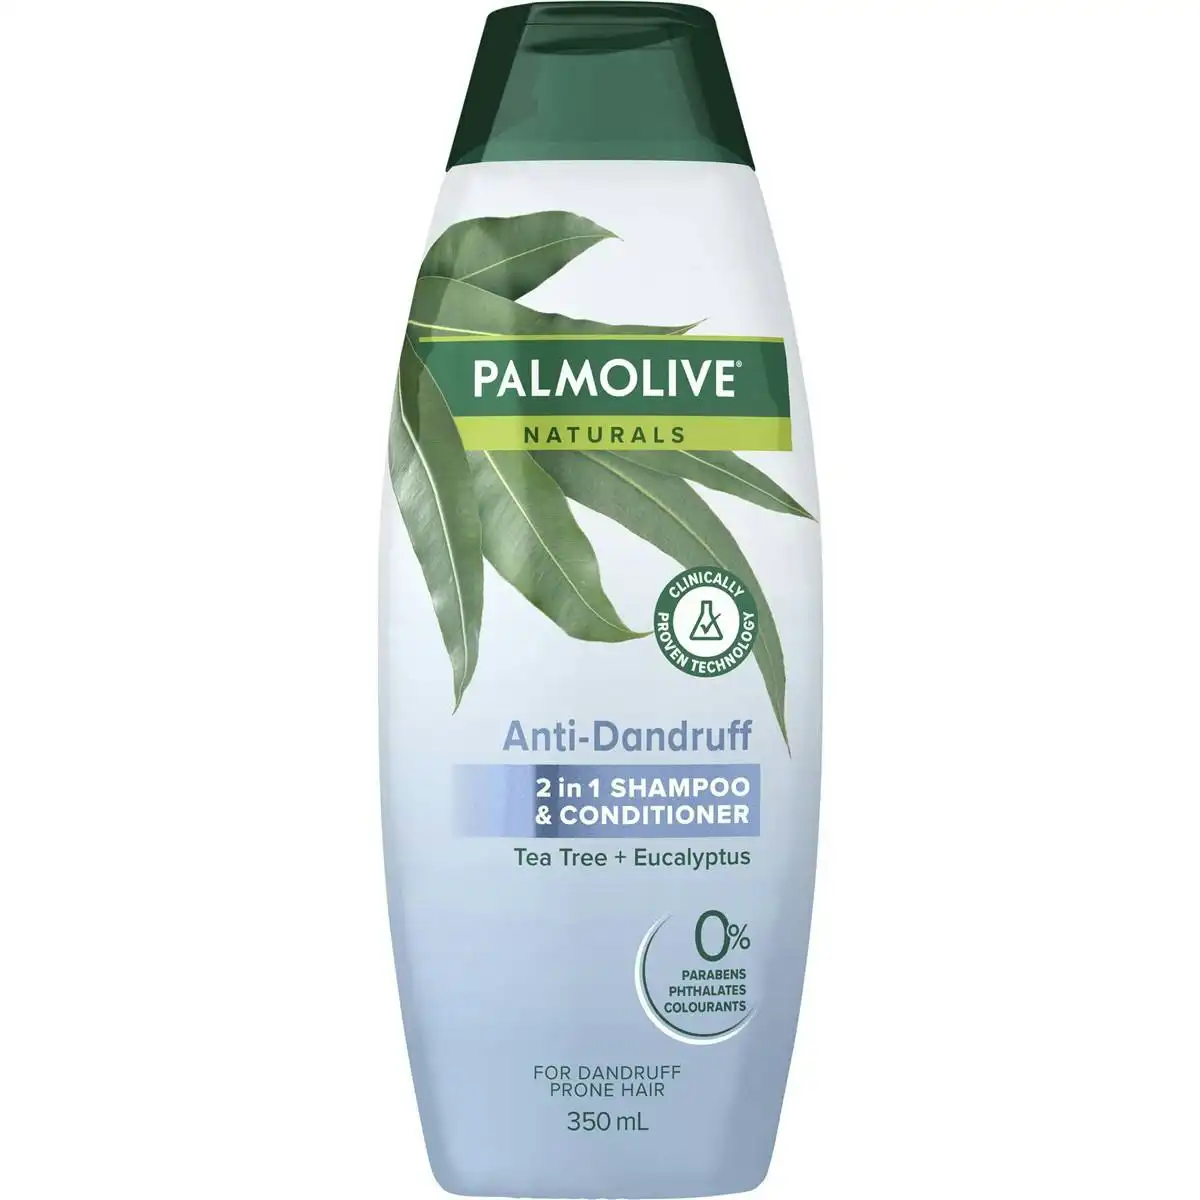 Palmolive Naturals Anti-dandruff 2in1 Shampoo & Hair Conditioner 350ml